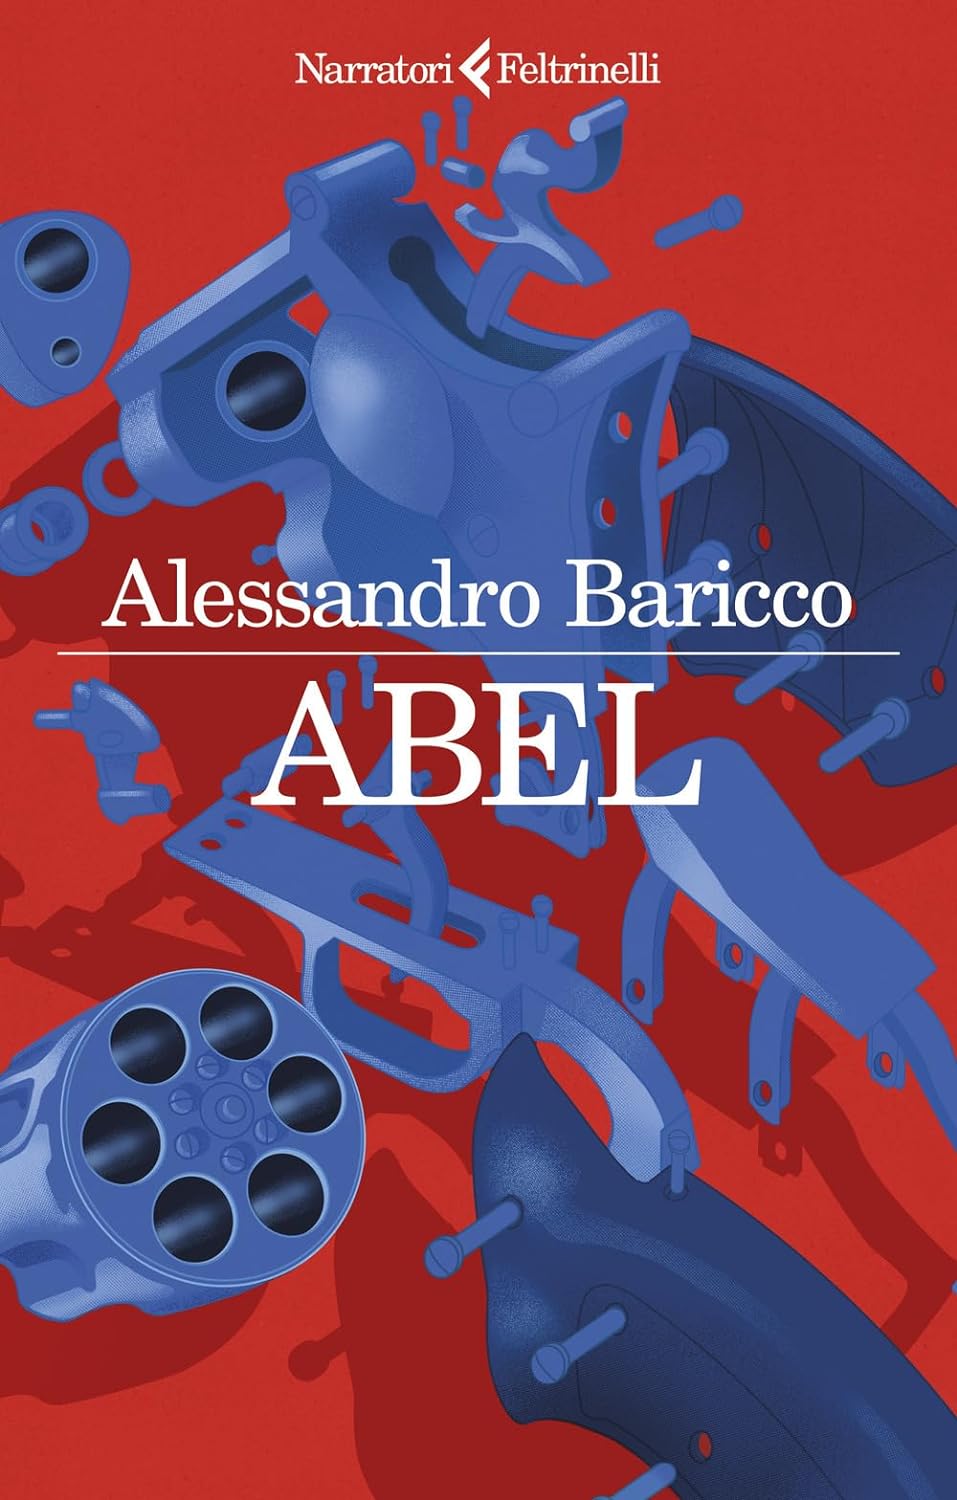 Abel Baricco